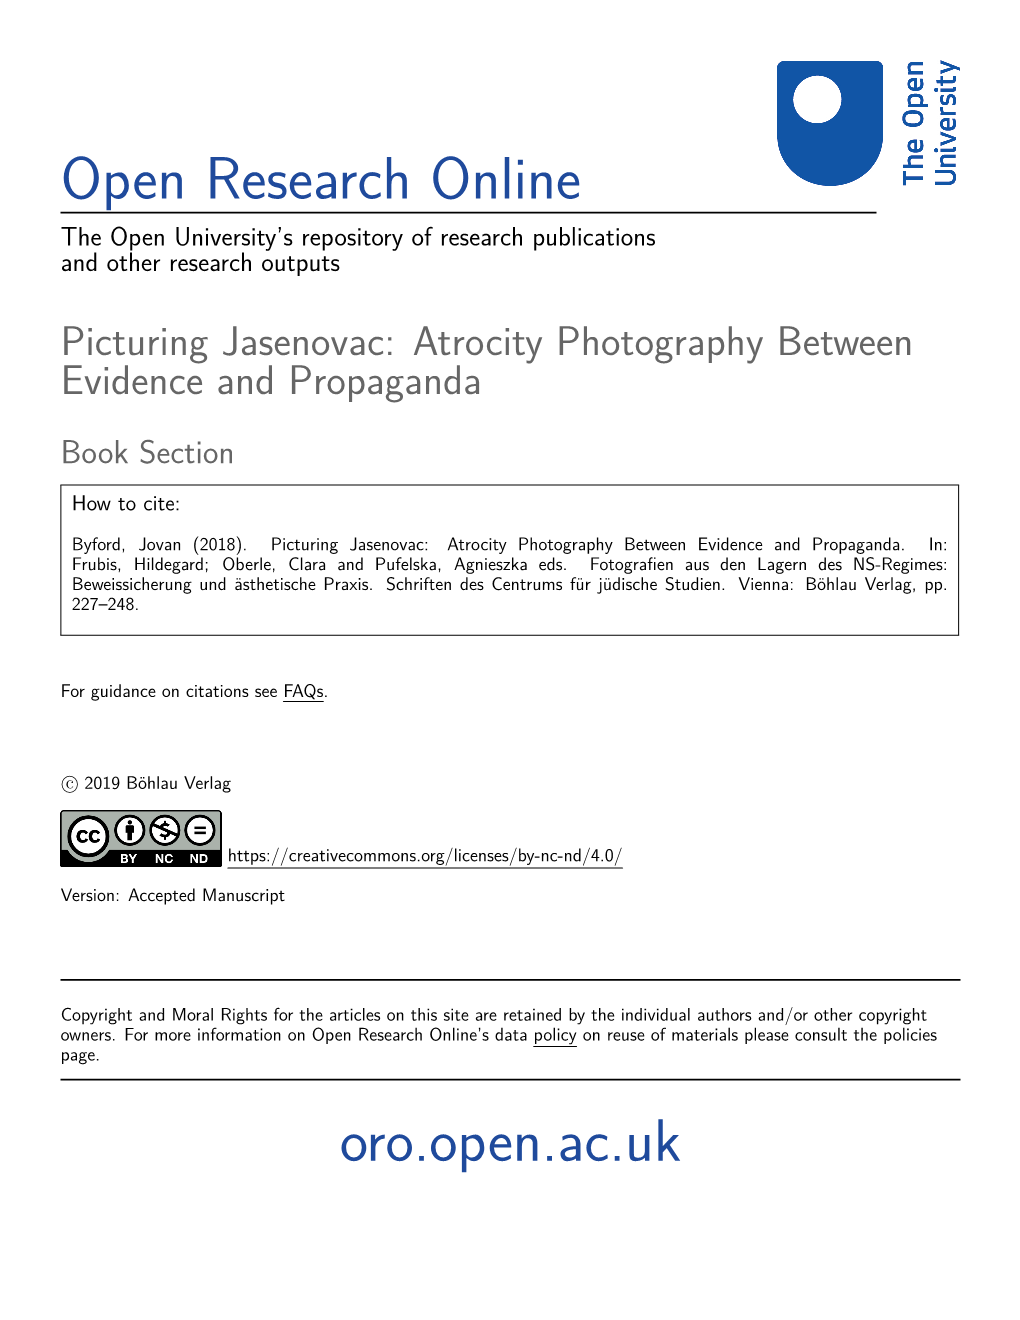 Picturing Jasenovac: Atrocity Photography Between Evidence and Propaganda